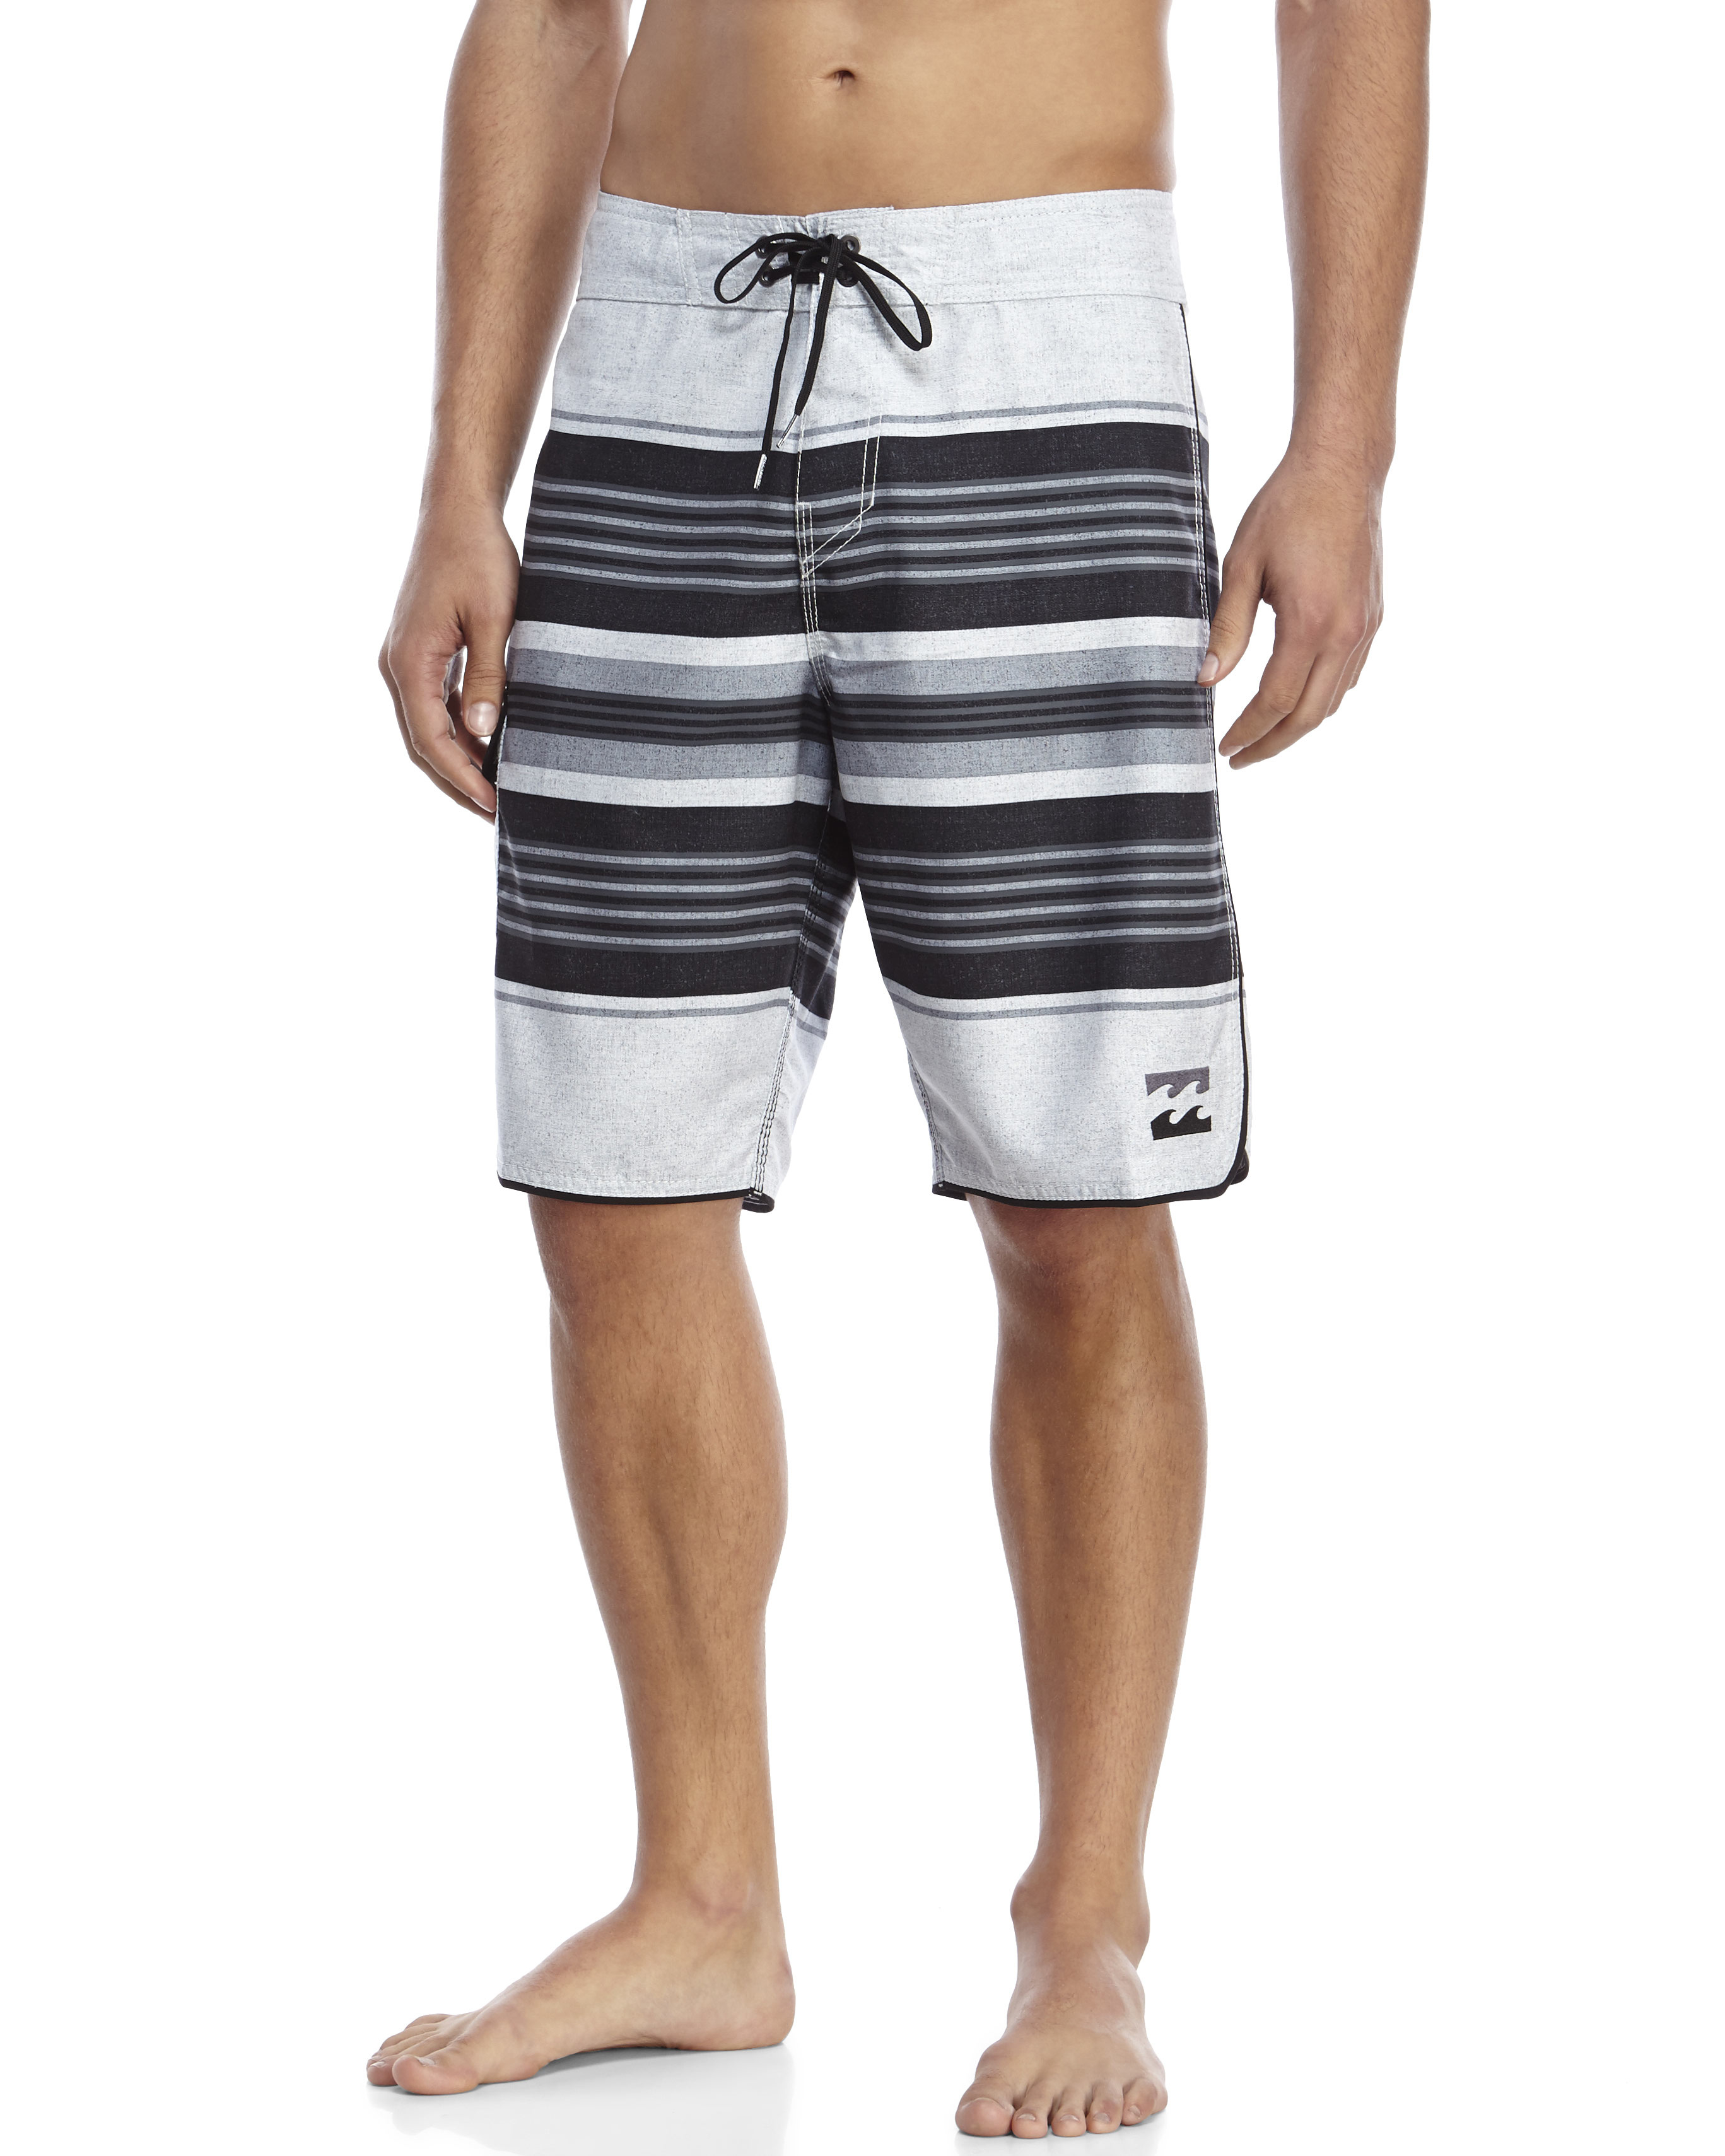 Lyst - Billabong All Day Stripe Board Shorts in Gray for Men